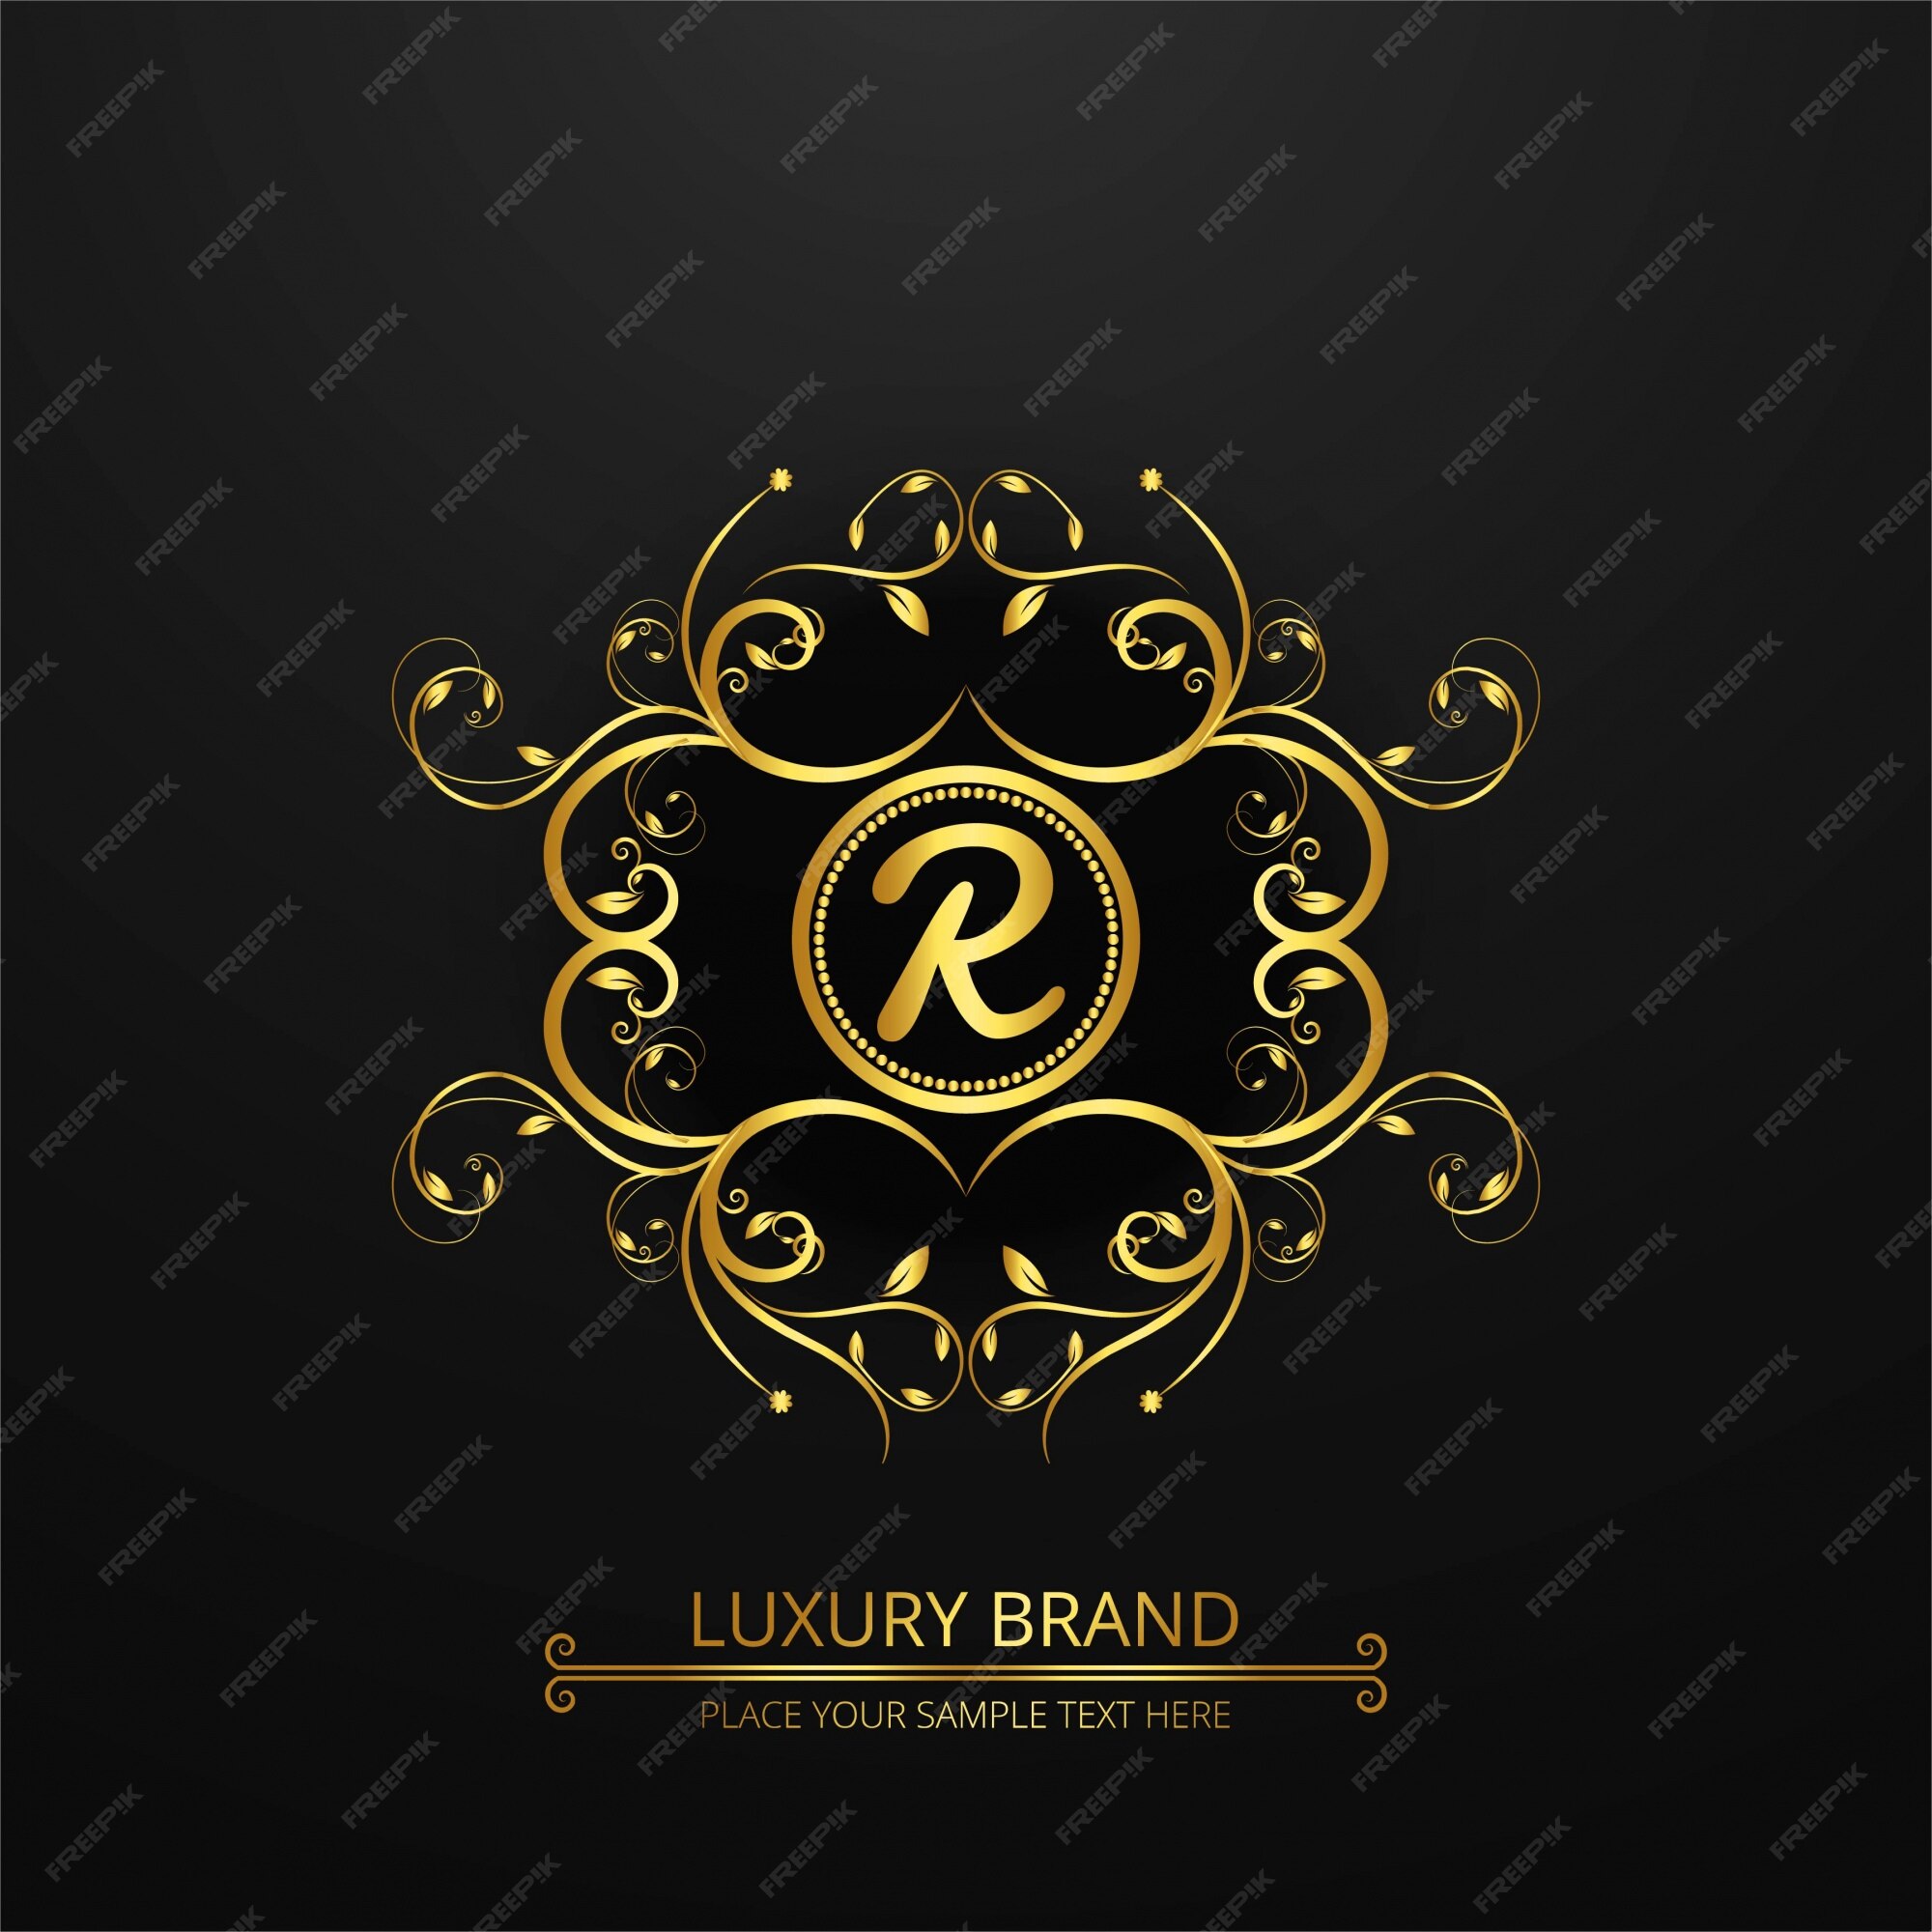 Premium Vector  Modern luxury brand name design